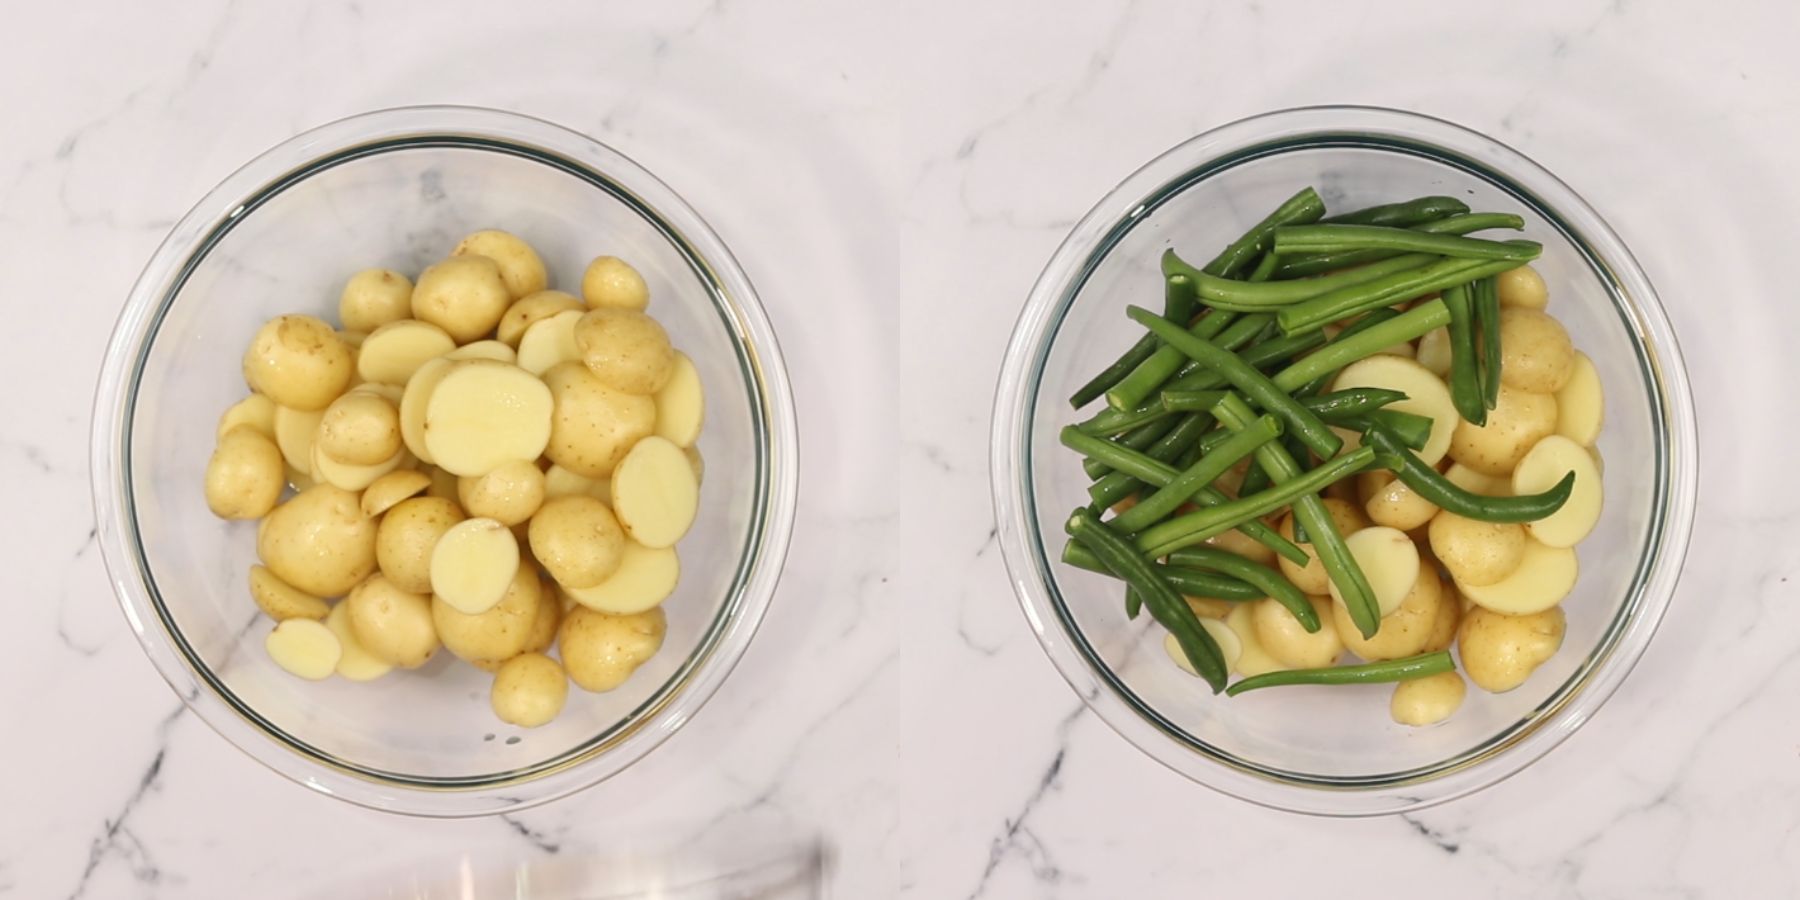 Green beans and potatoes process shots.